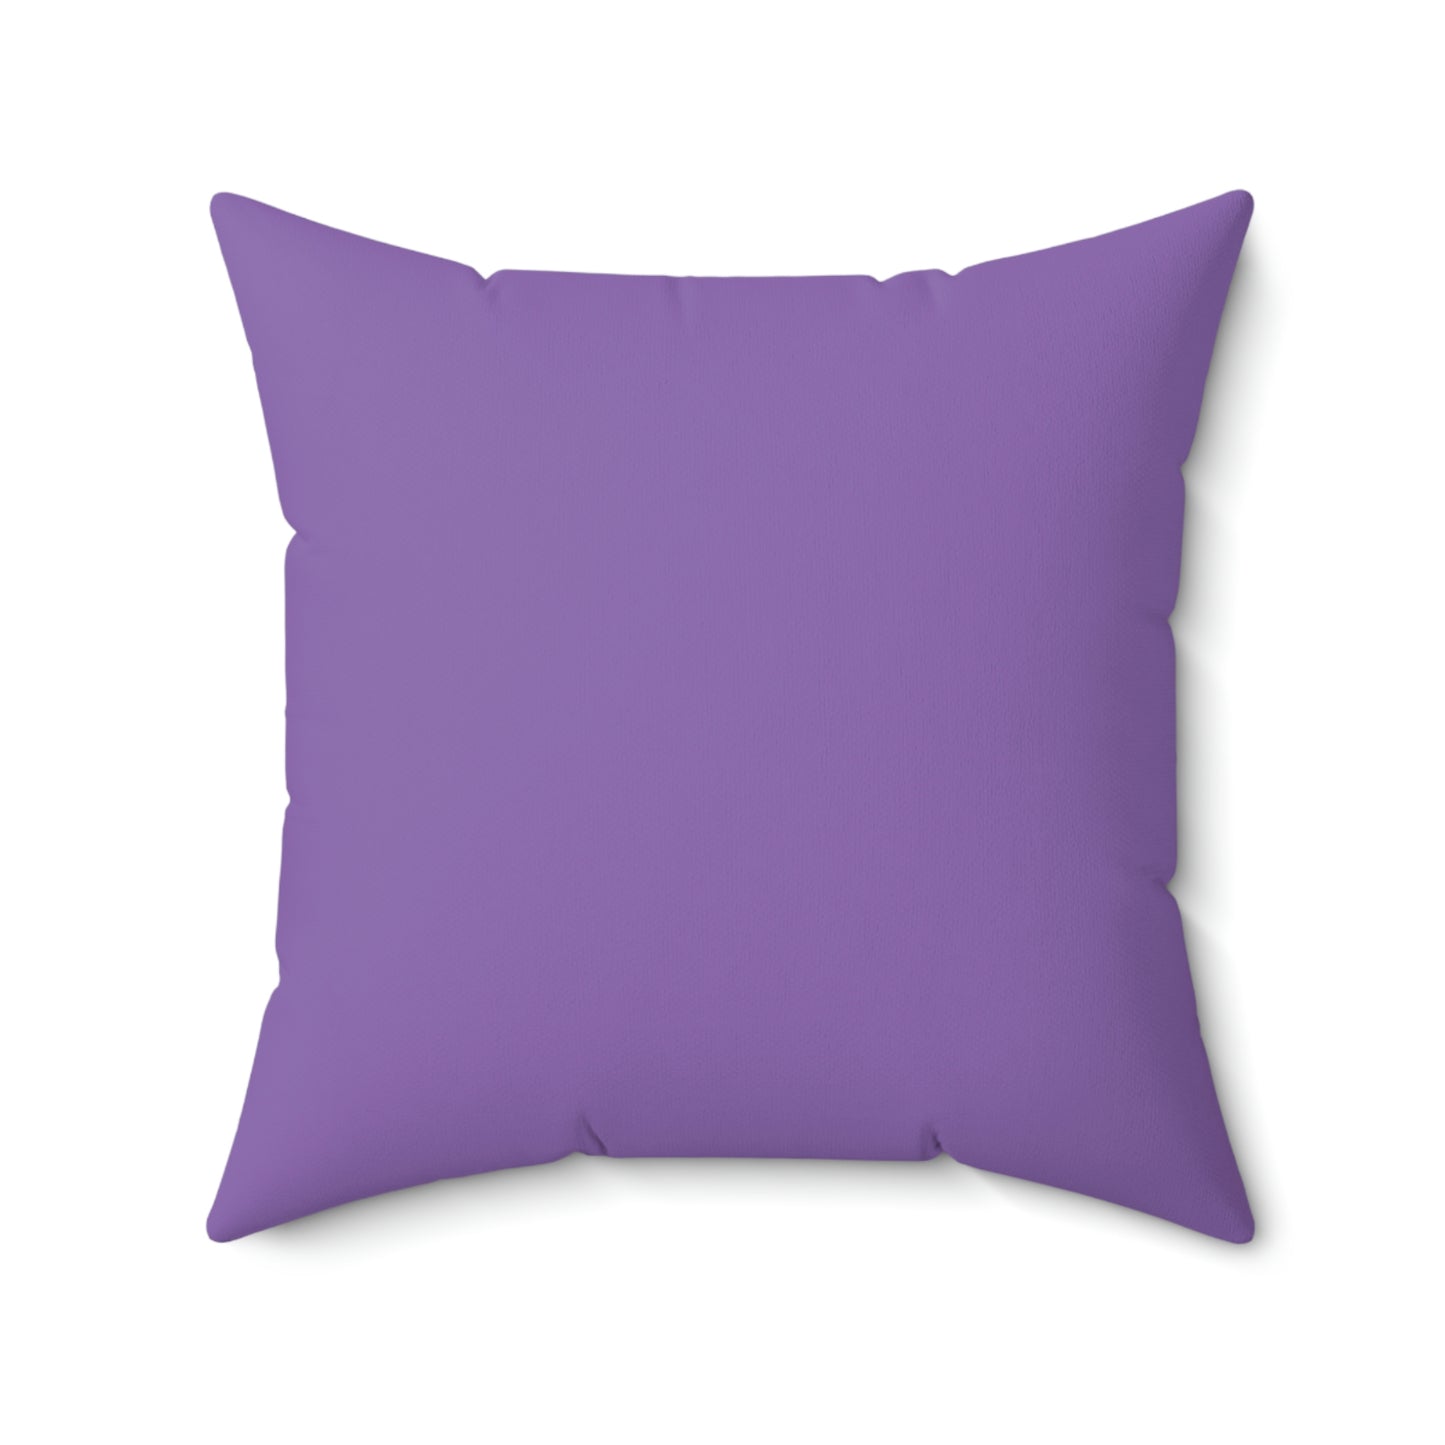 Spun Polyester Square Pillow Case "Mom Hero on Light Purple”